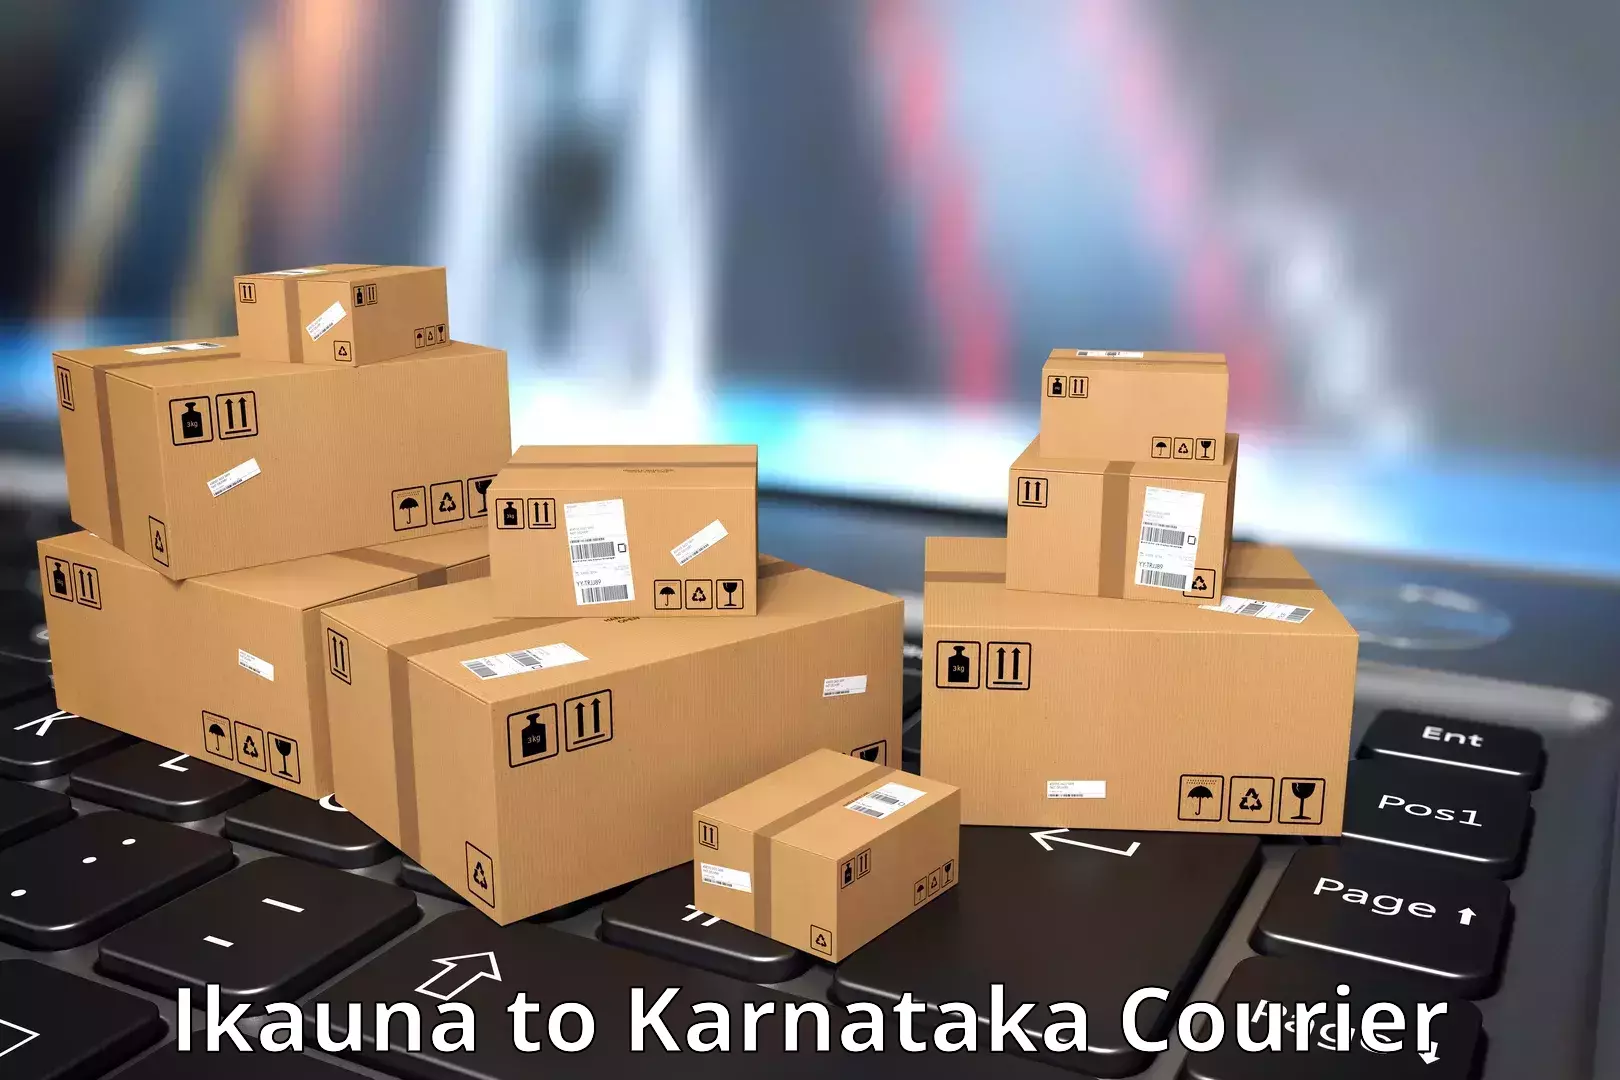 Cash on delivery service Ikauna to Karnataka